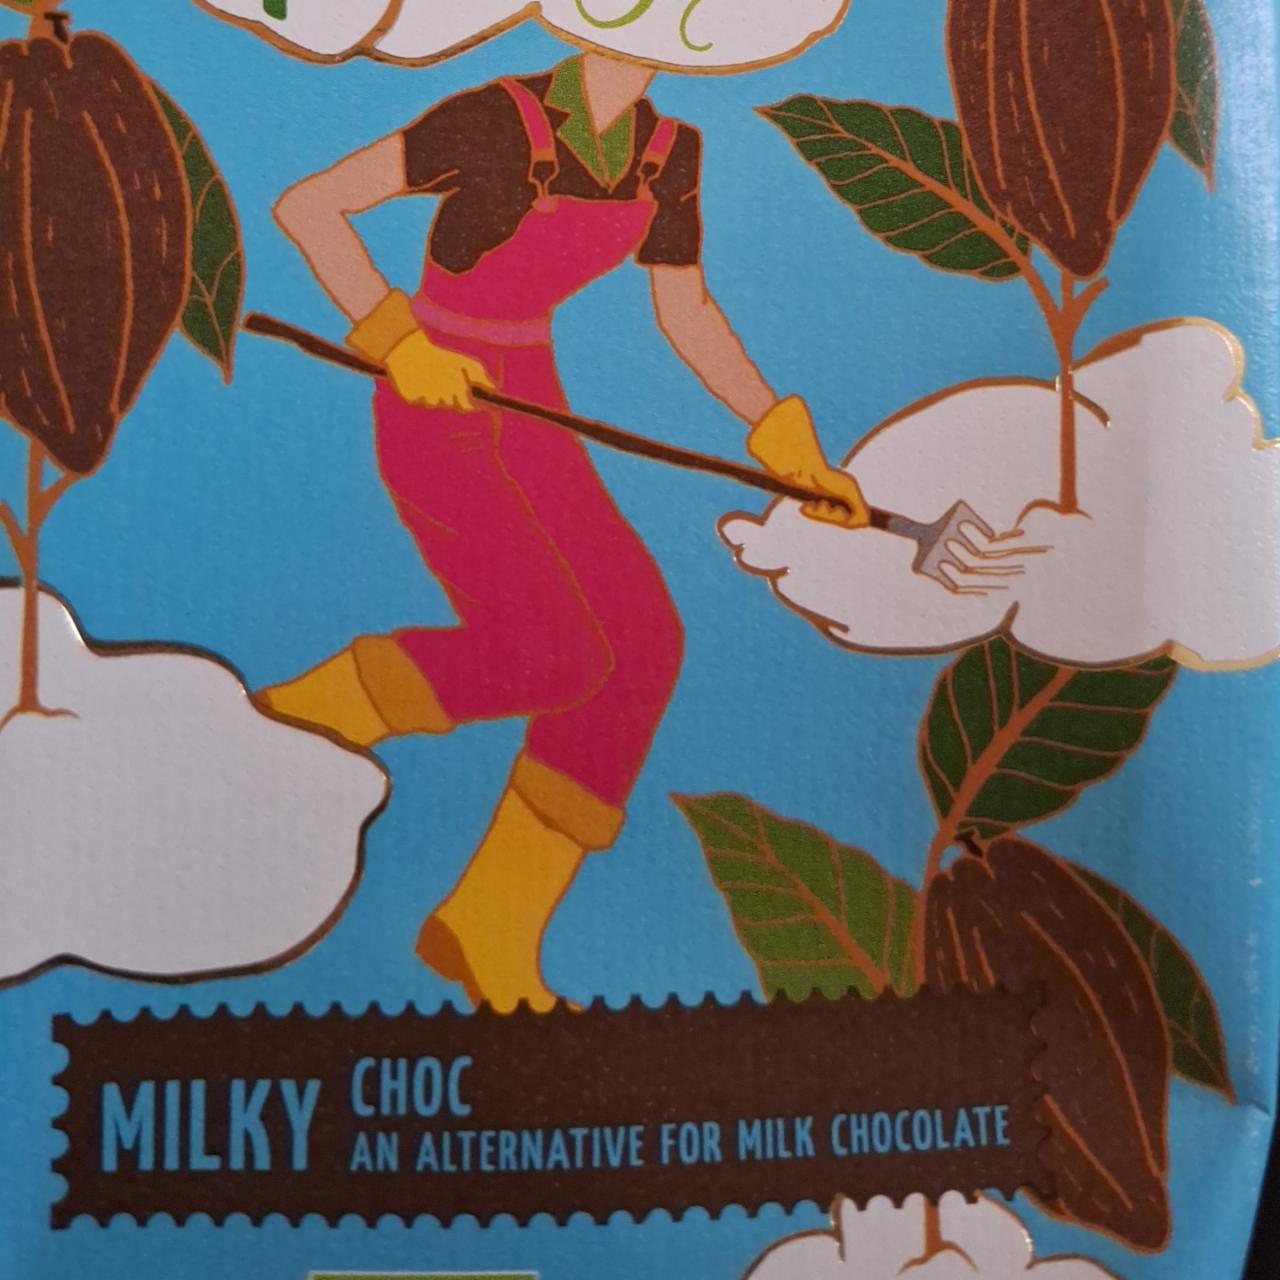 Fotografie - Milky choc an alternative for milk chocolate Chocolates from heaven